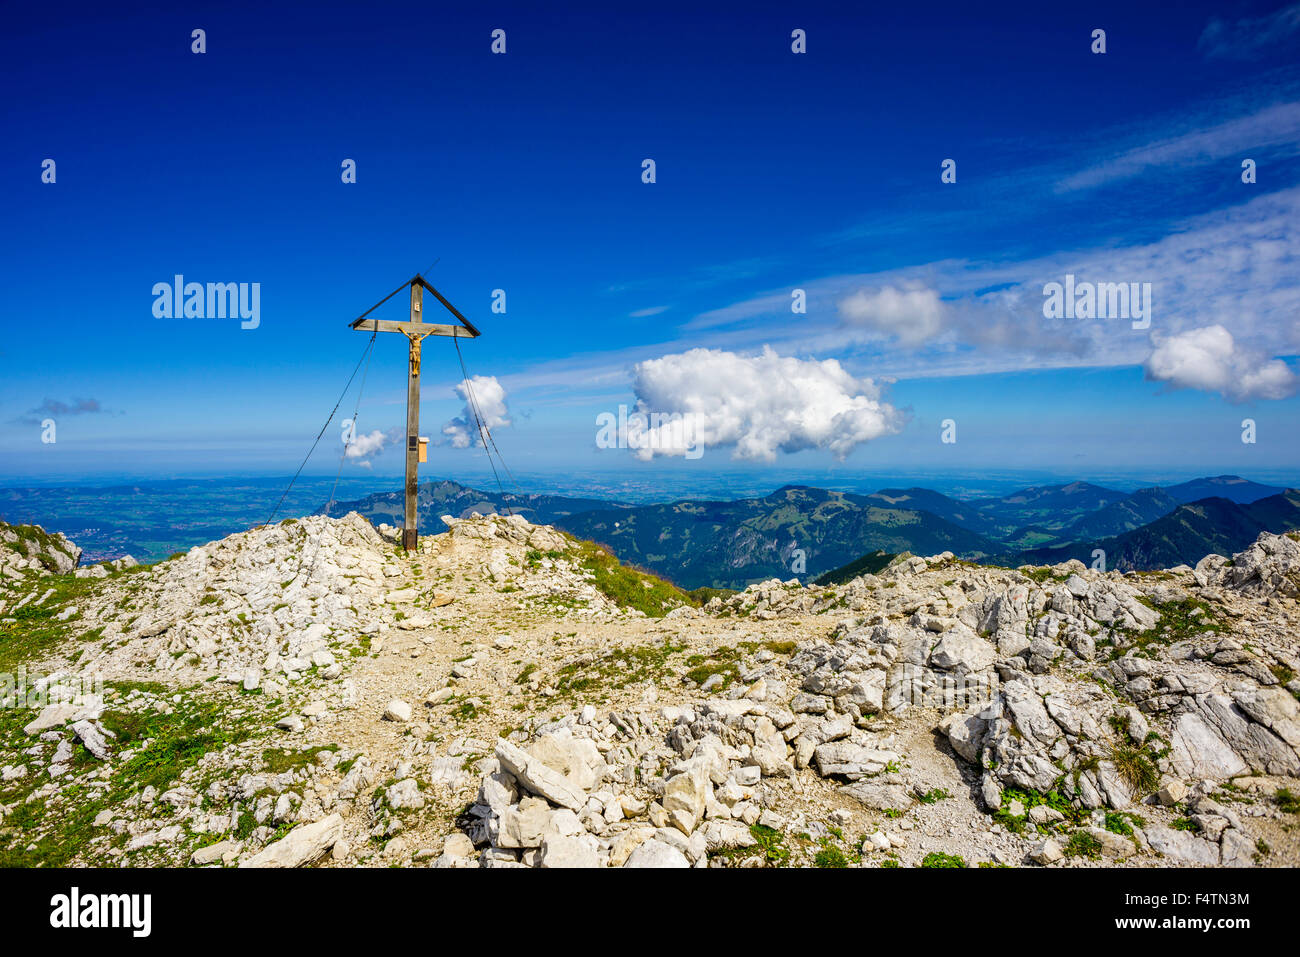 Allgäu Allgäu, Alpes, Alpes, Bavaria, montagne, ciel bleu, christianisme, chrétien, Allemagne, Europe, montagne, Sommet cross, Gr Banque D'Images